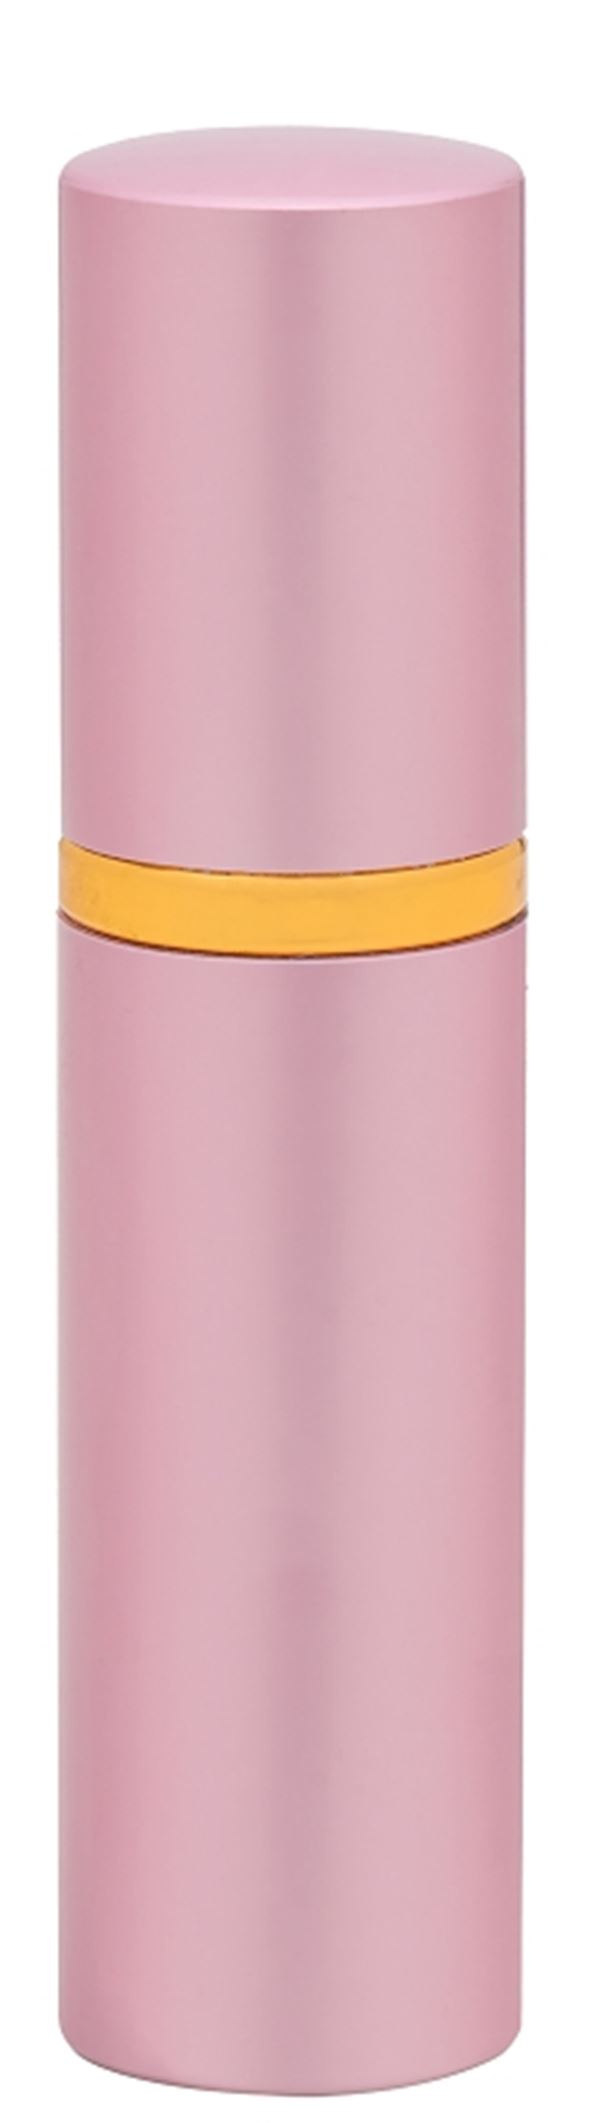 Sabre LS-22-US Lipstick Pepper Spray, 0.75 oz